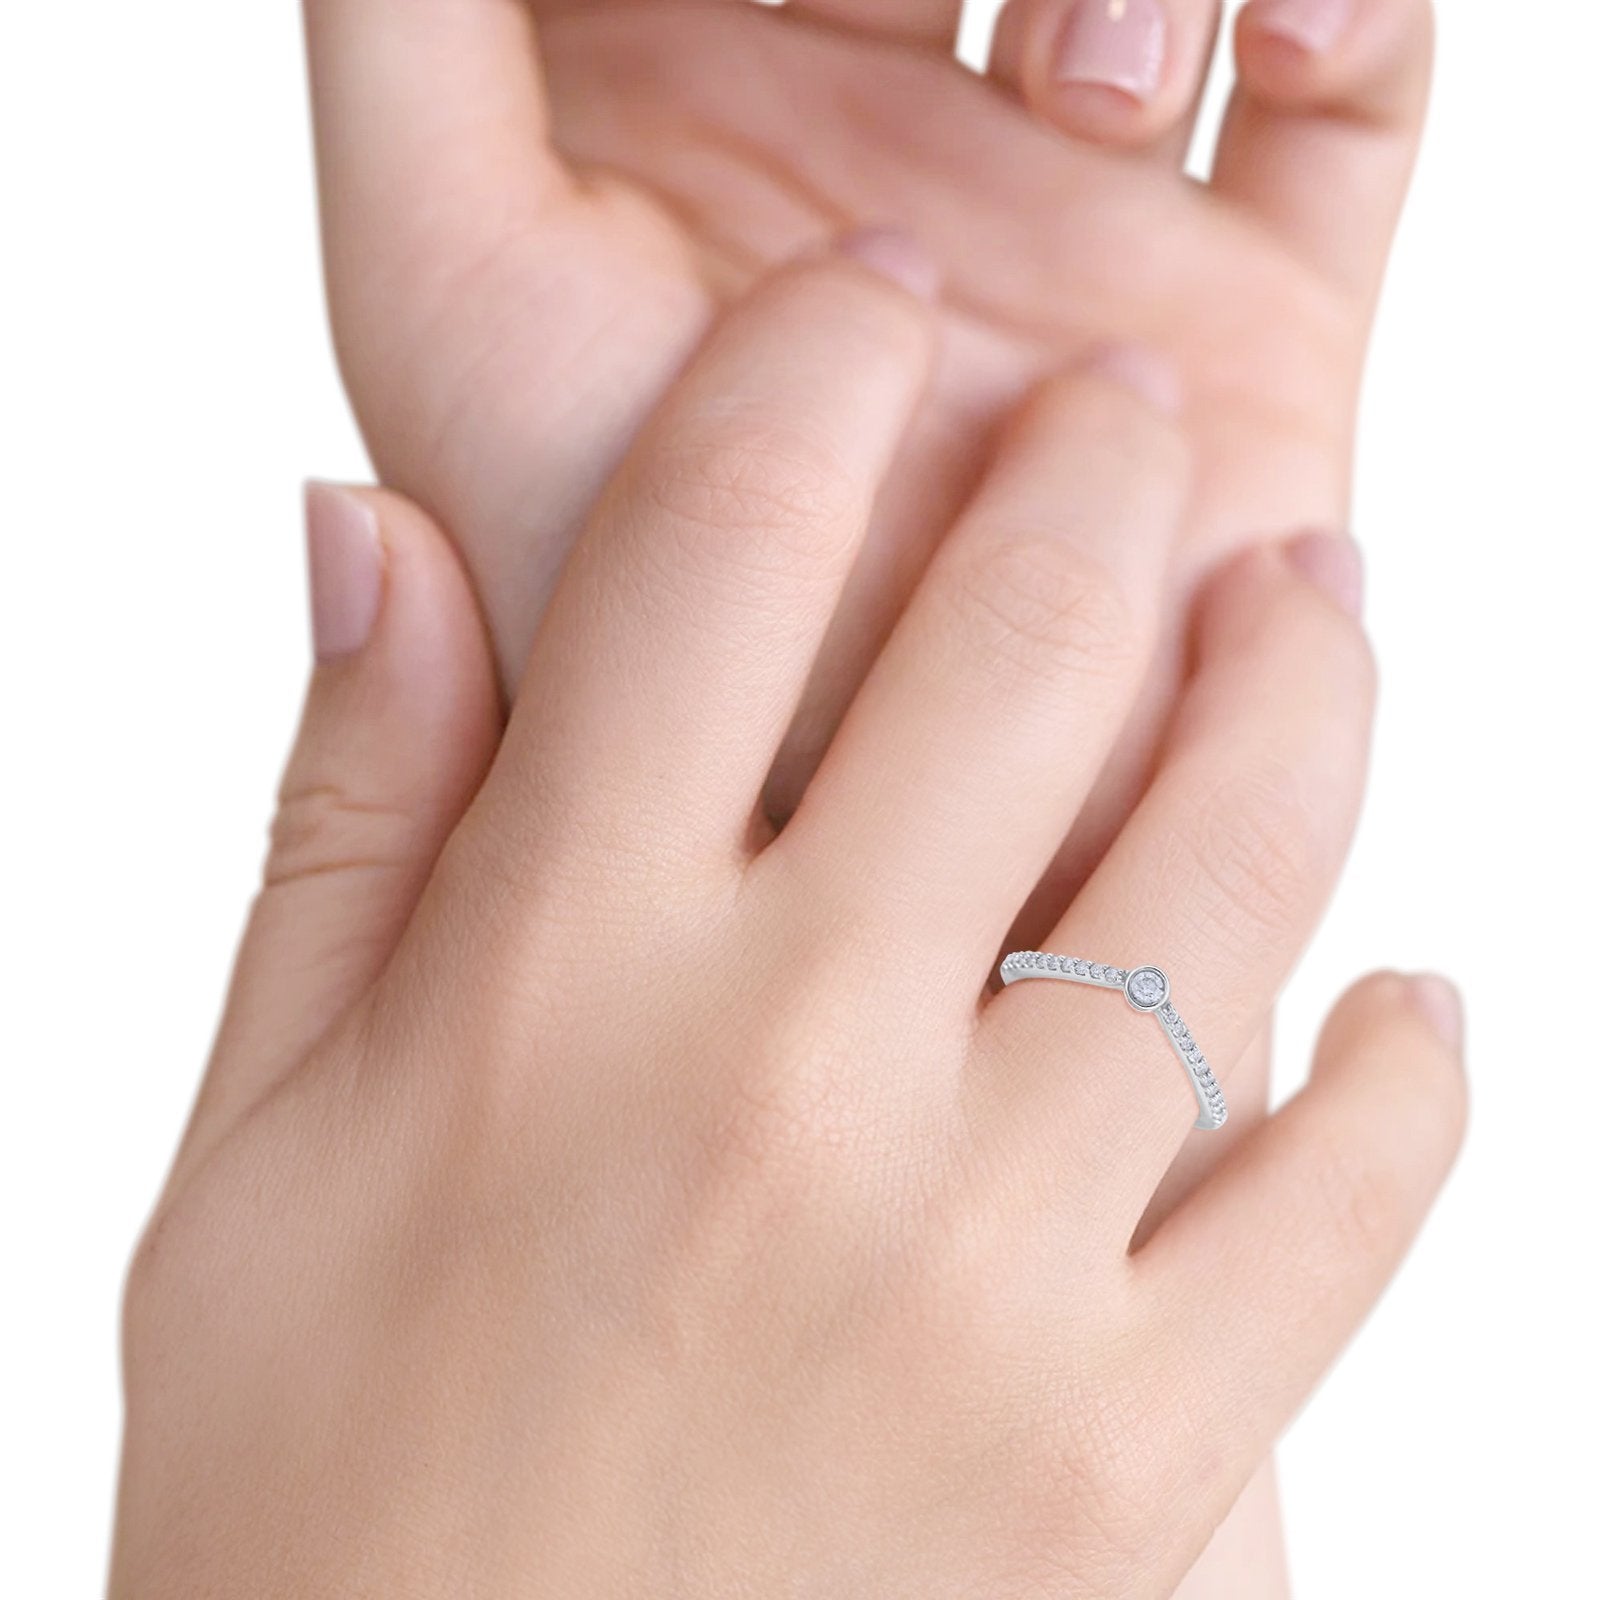 14K Gold 0.18ct Round 3.7mm G SI Diamond Trendy Chevron Engagement Wedding Ring